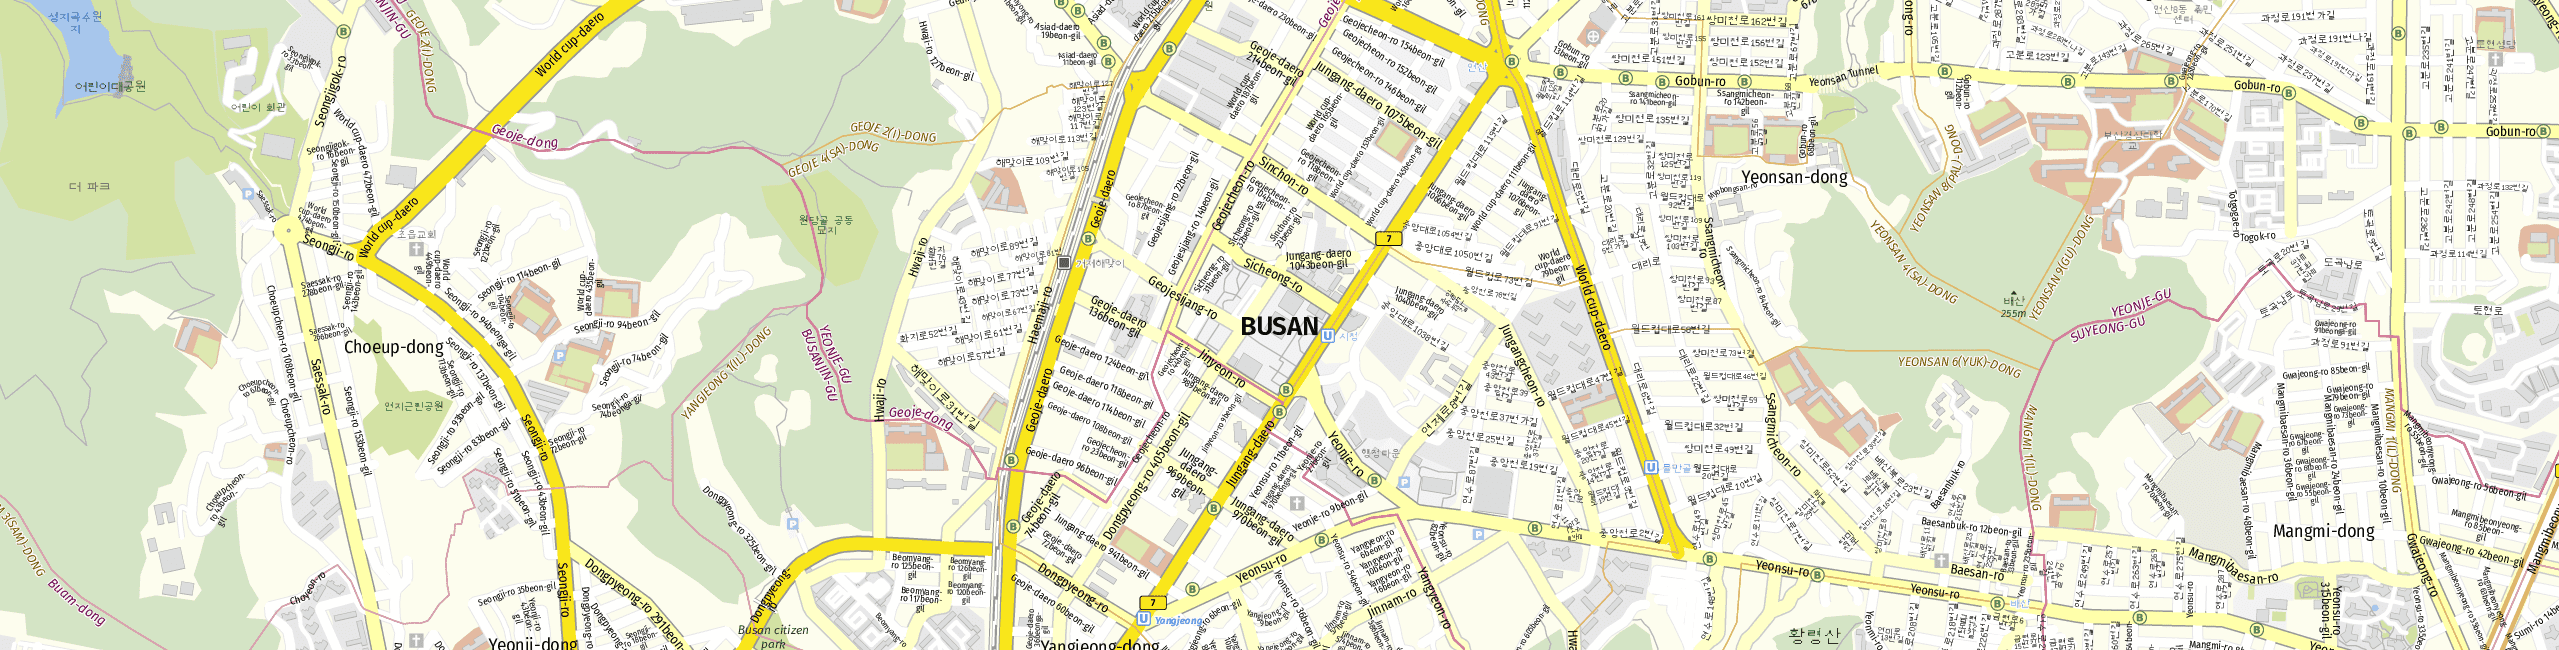 Stadtplan Busan zum Downloaden.